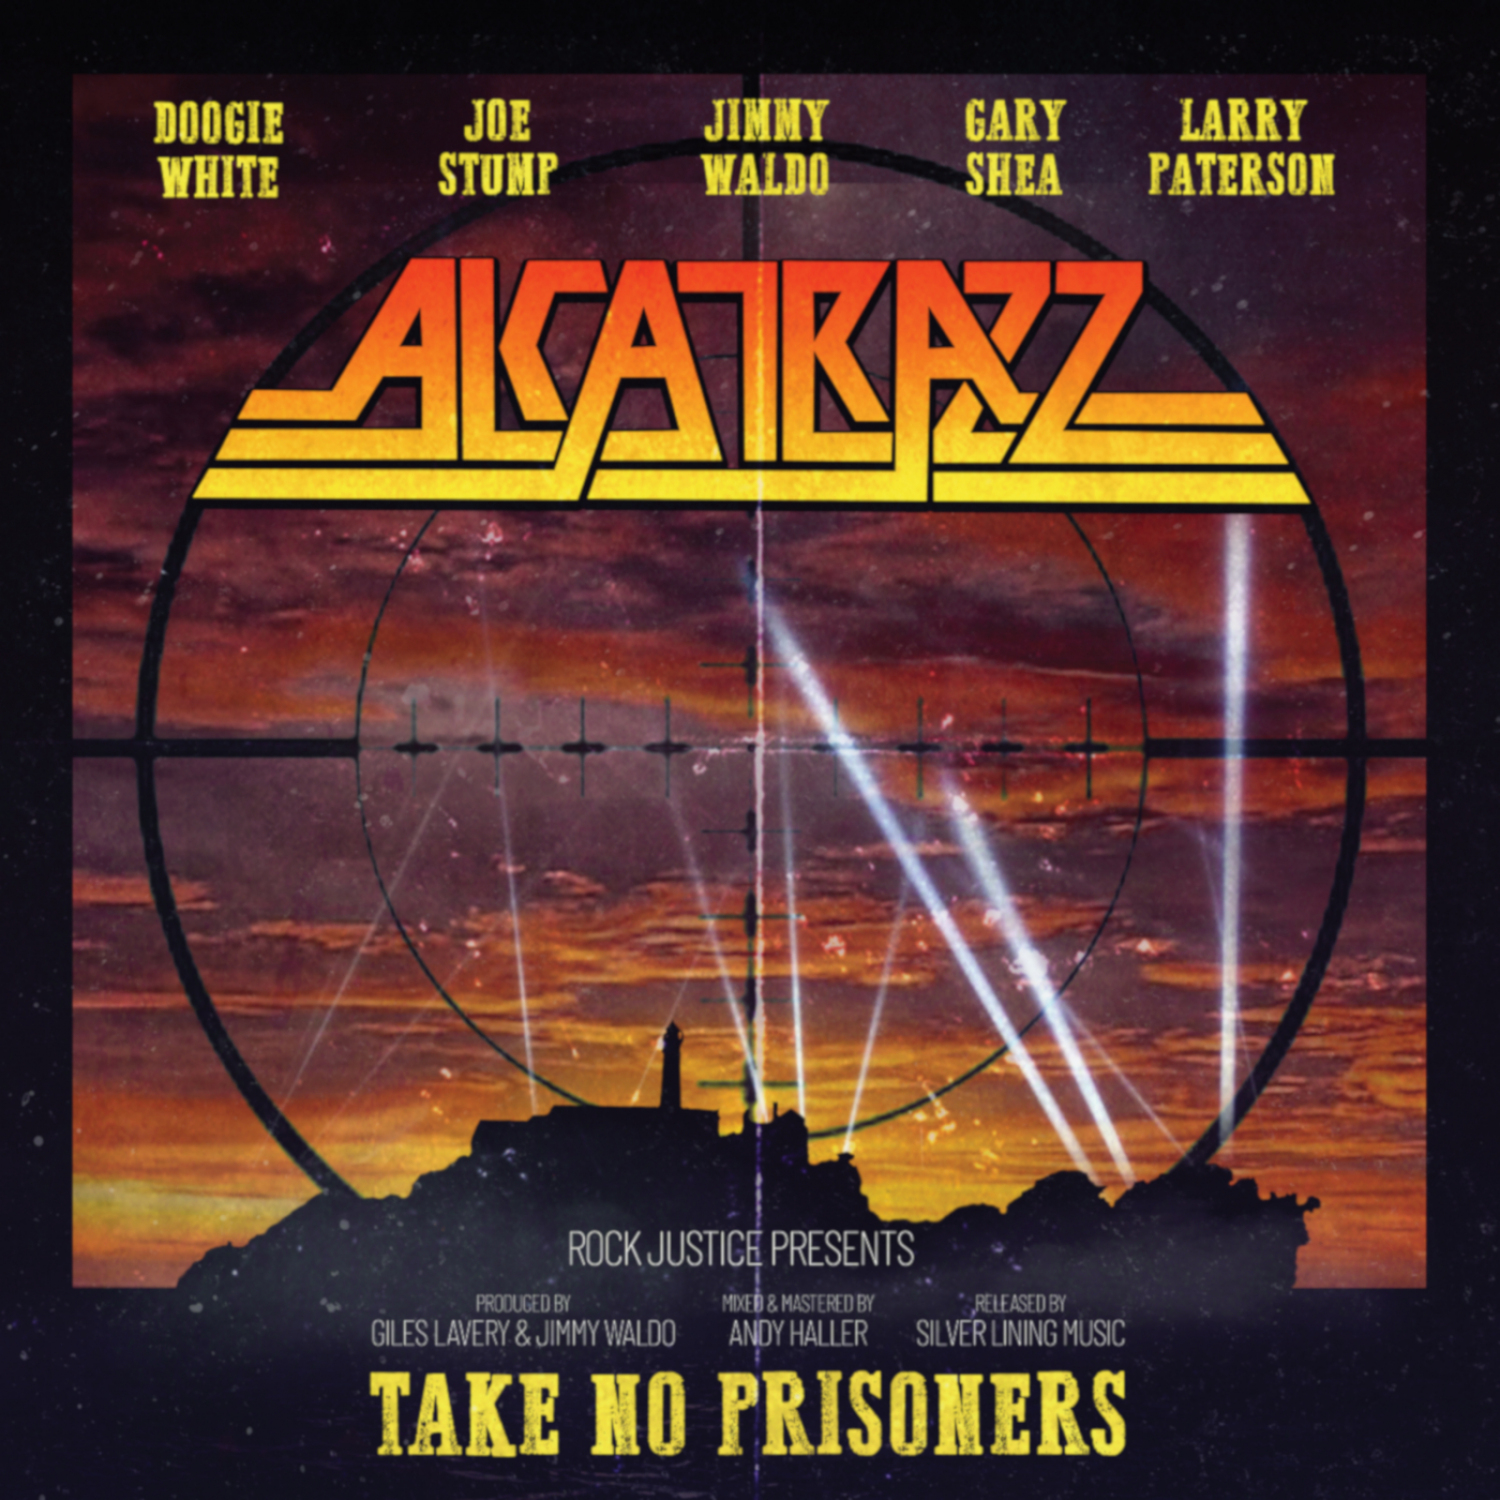 Alcatrazz - Take No Prisoners